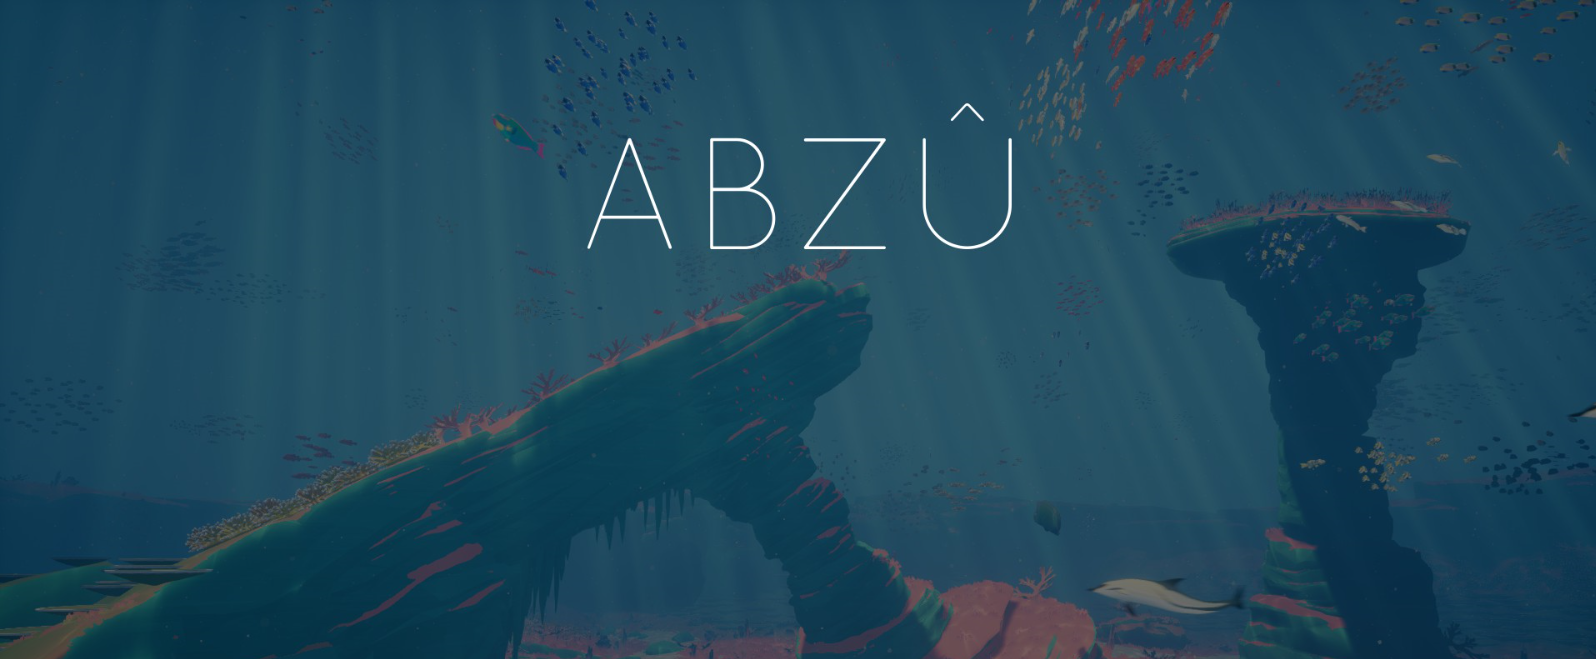 ABZU游戏评测20171217002